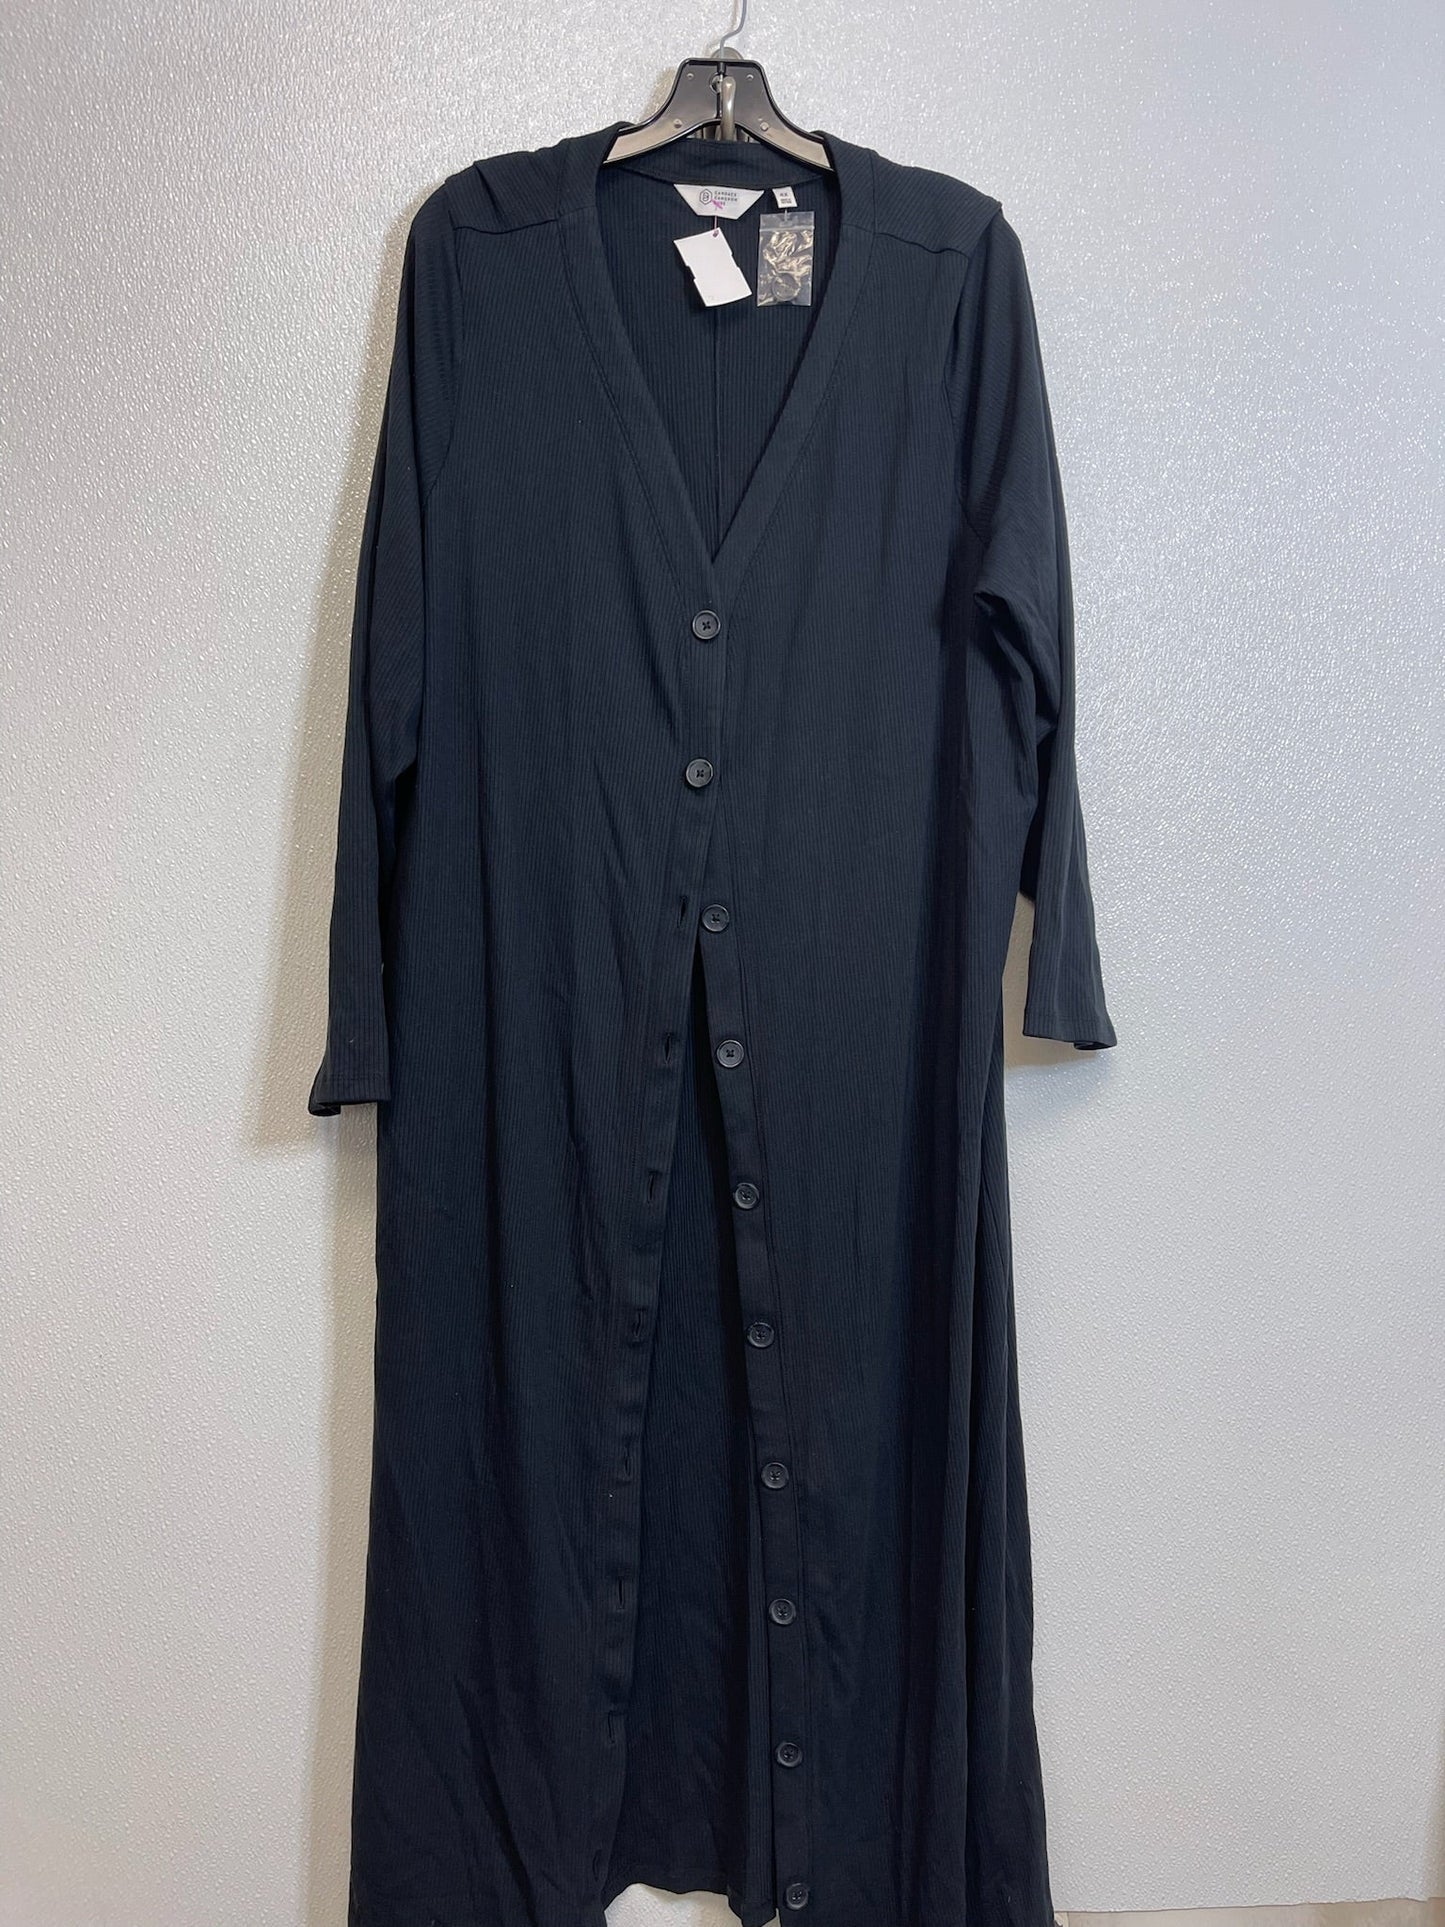 Black Dress Casual Short Clothes Mentor, Size 4x